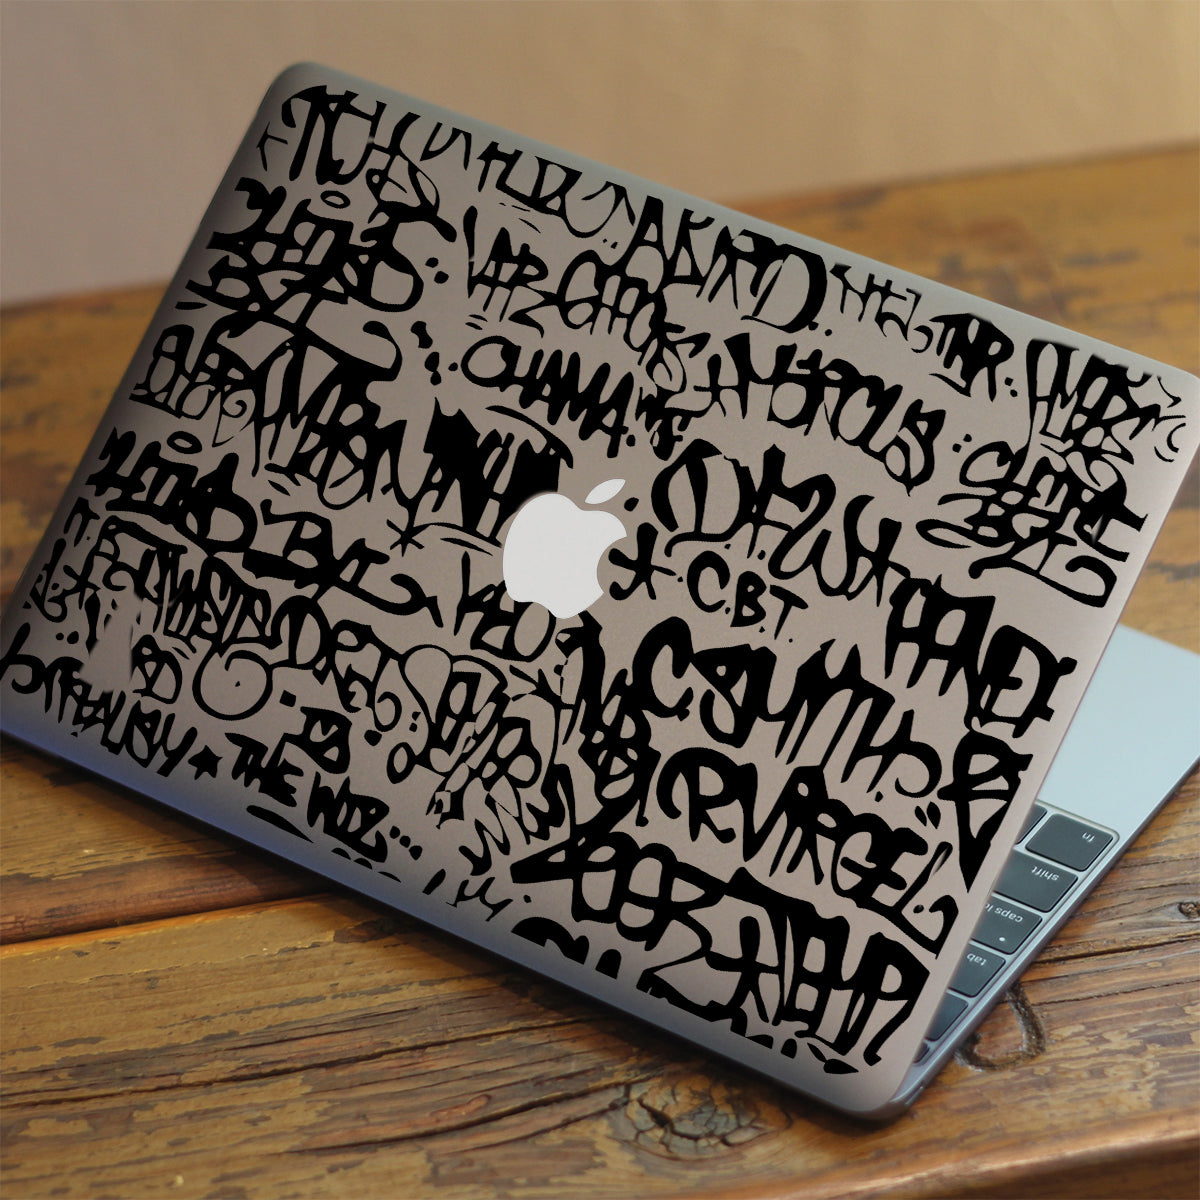 Full Graffiti Macbook Decal